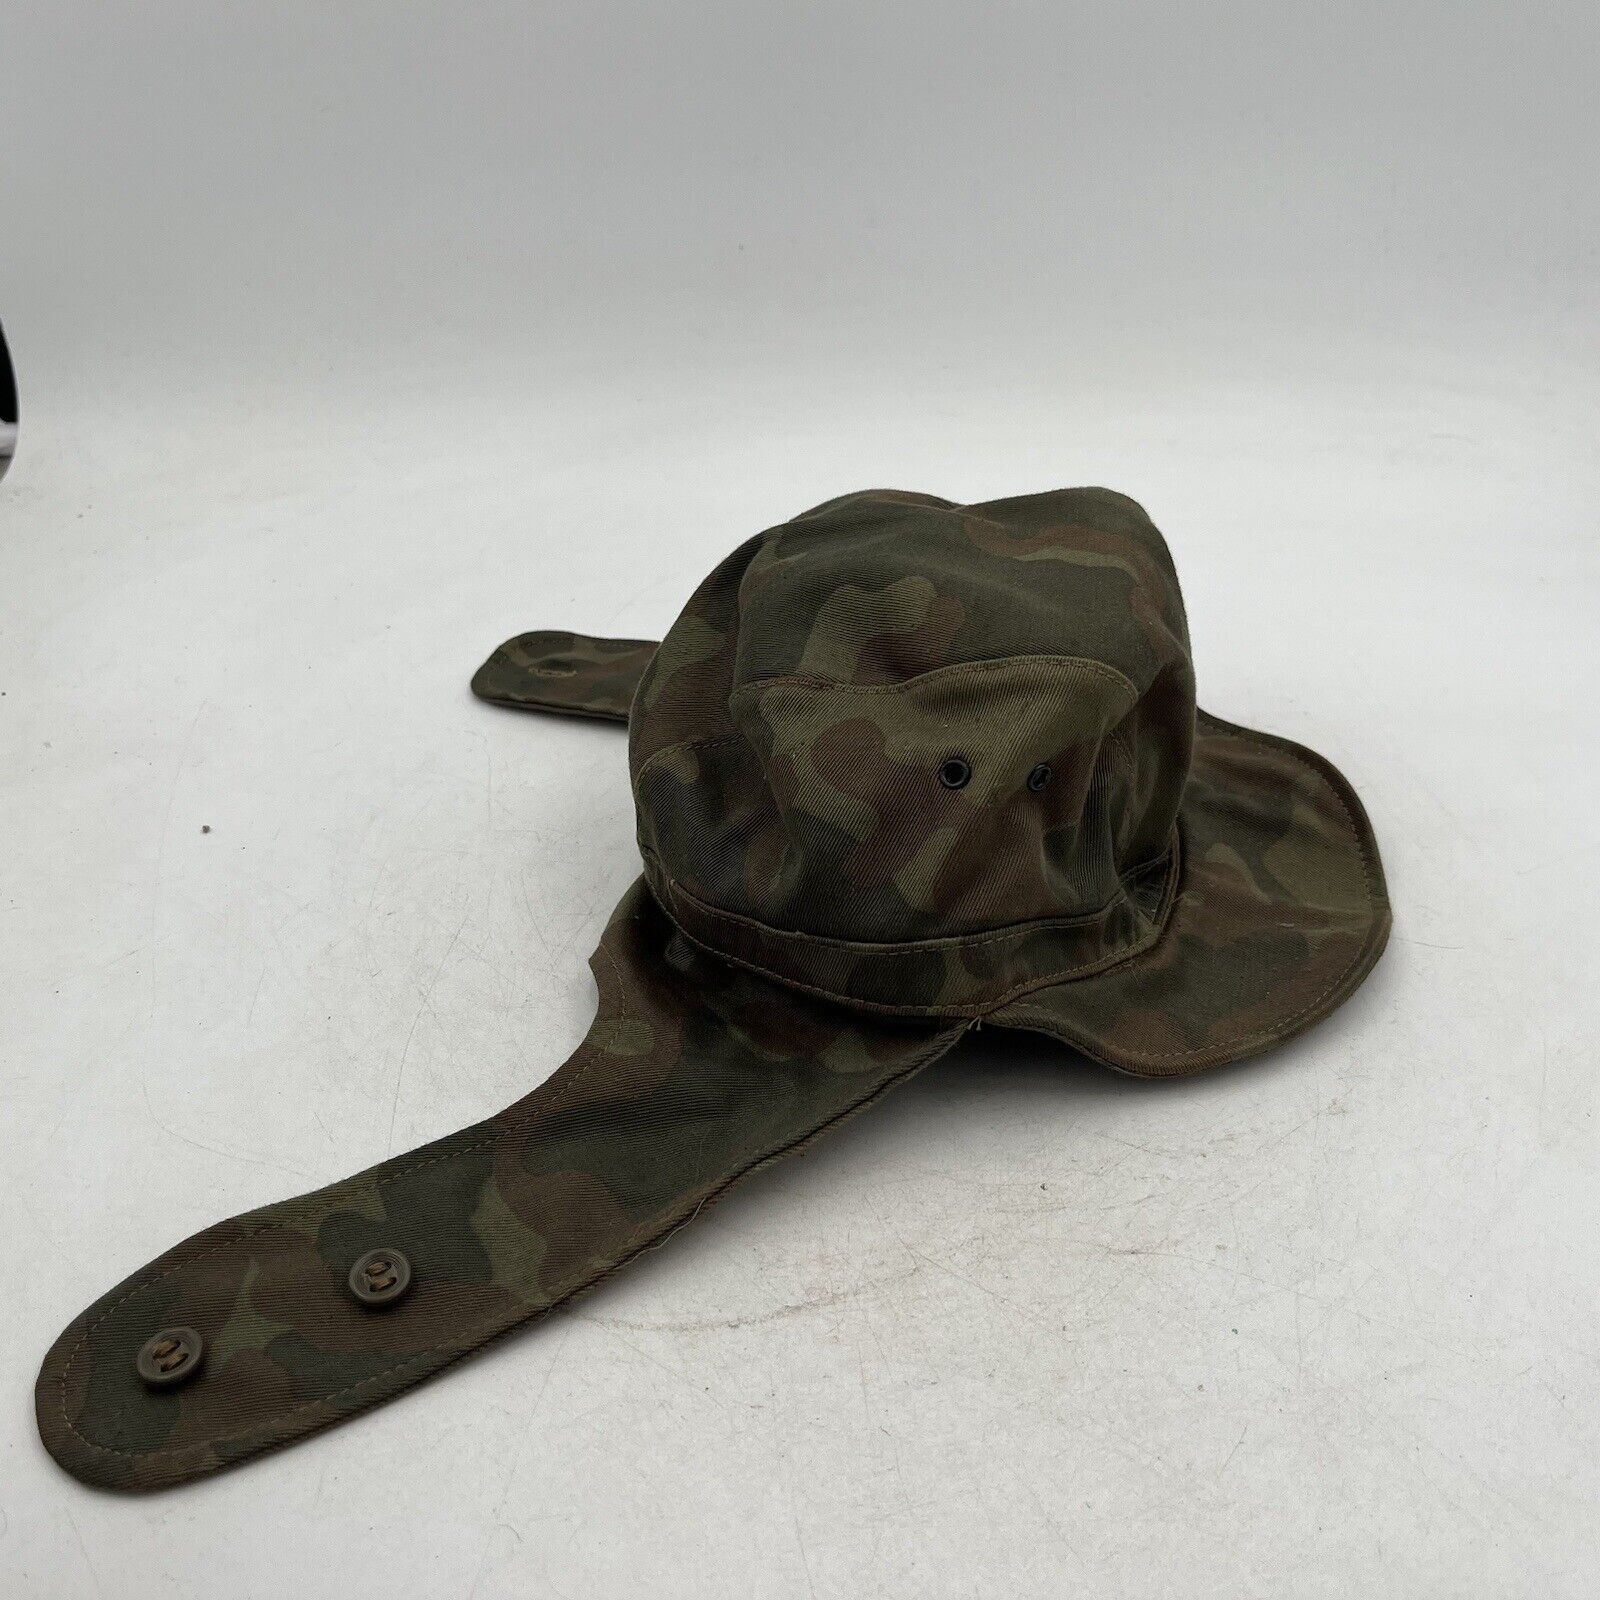 Russian Military Army size 55 TTSKO Flora Woodland Camo Uniform Cap Hat Ear Flap